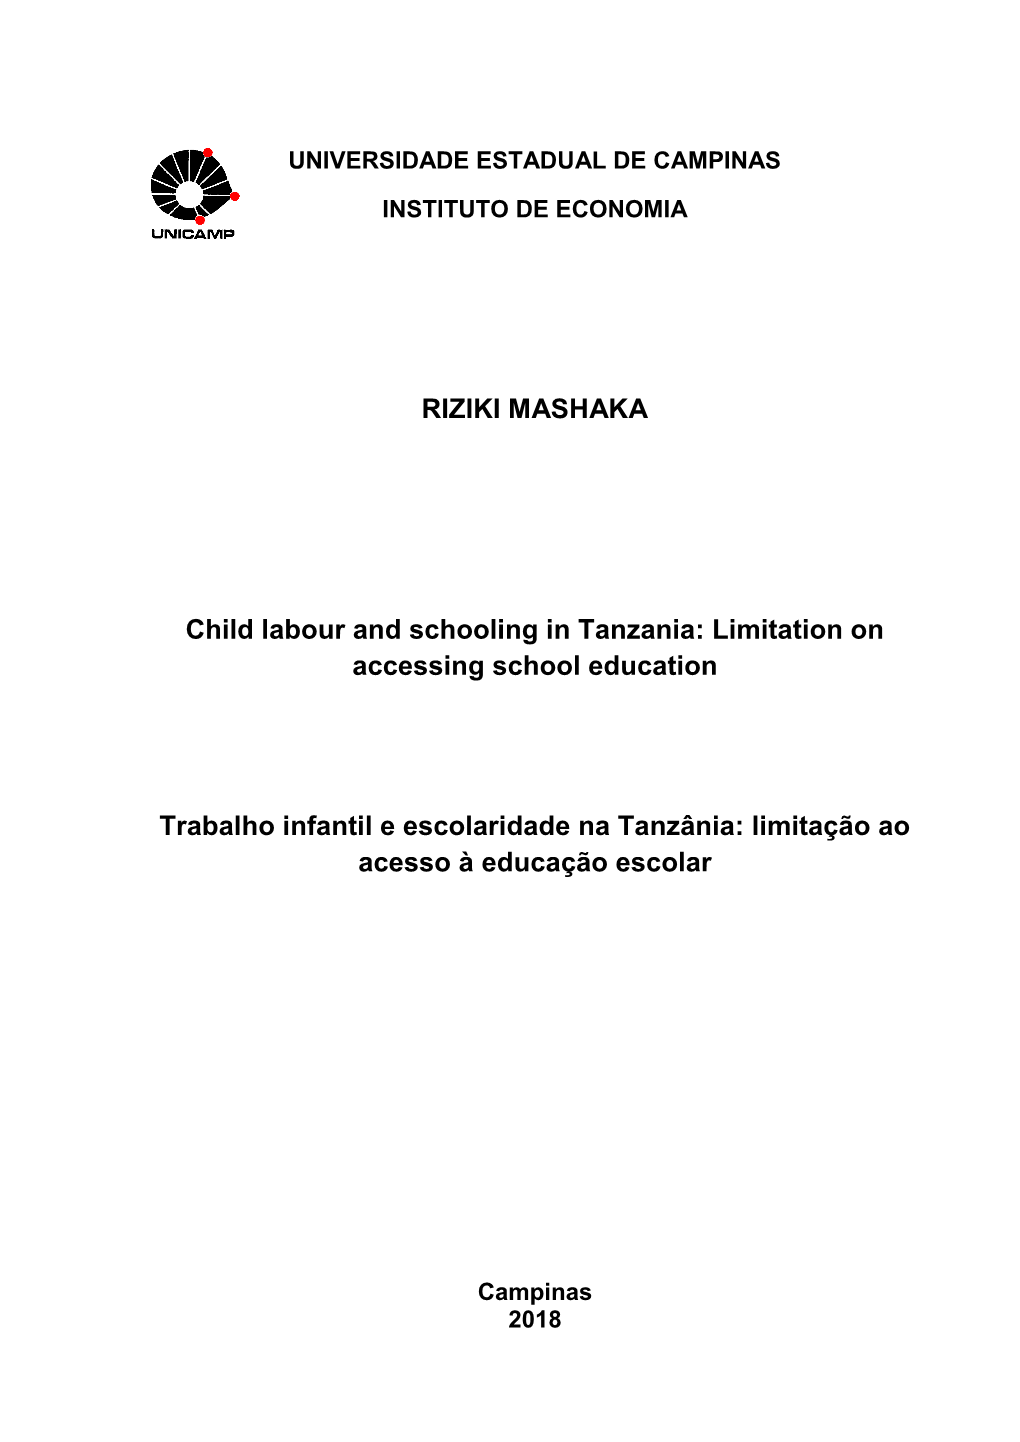 RIZIKI MASHAKA Child Labour and Schooling in Tanzania: Limitation